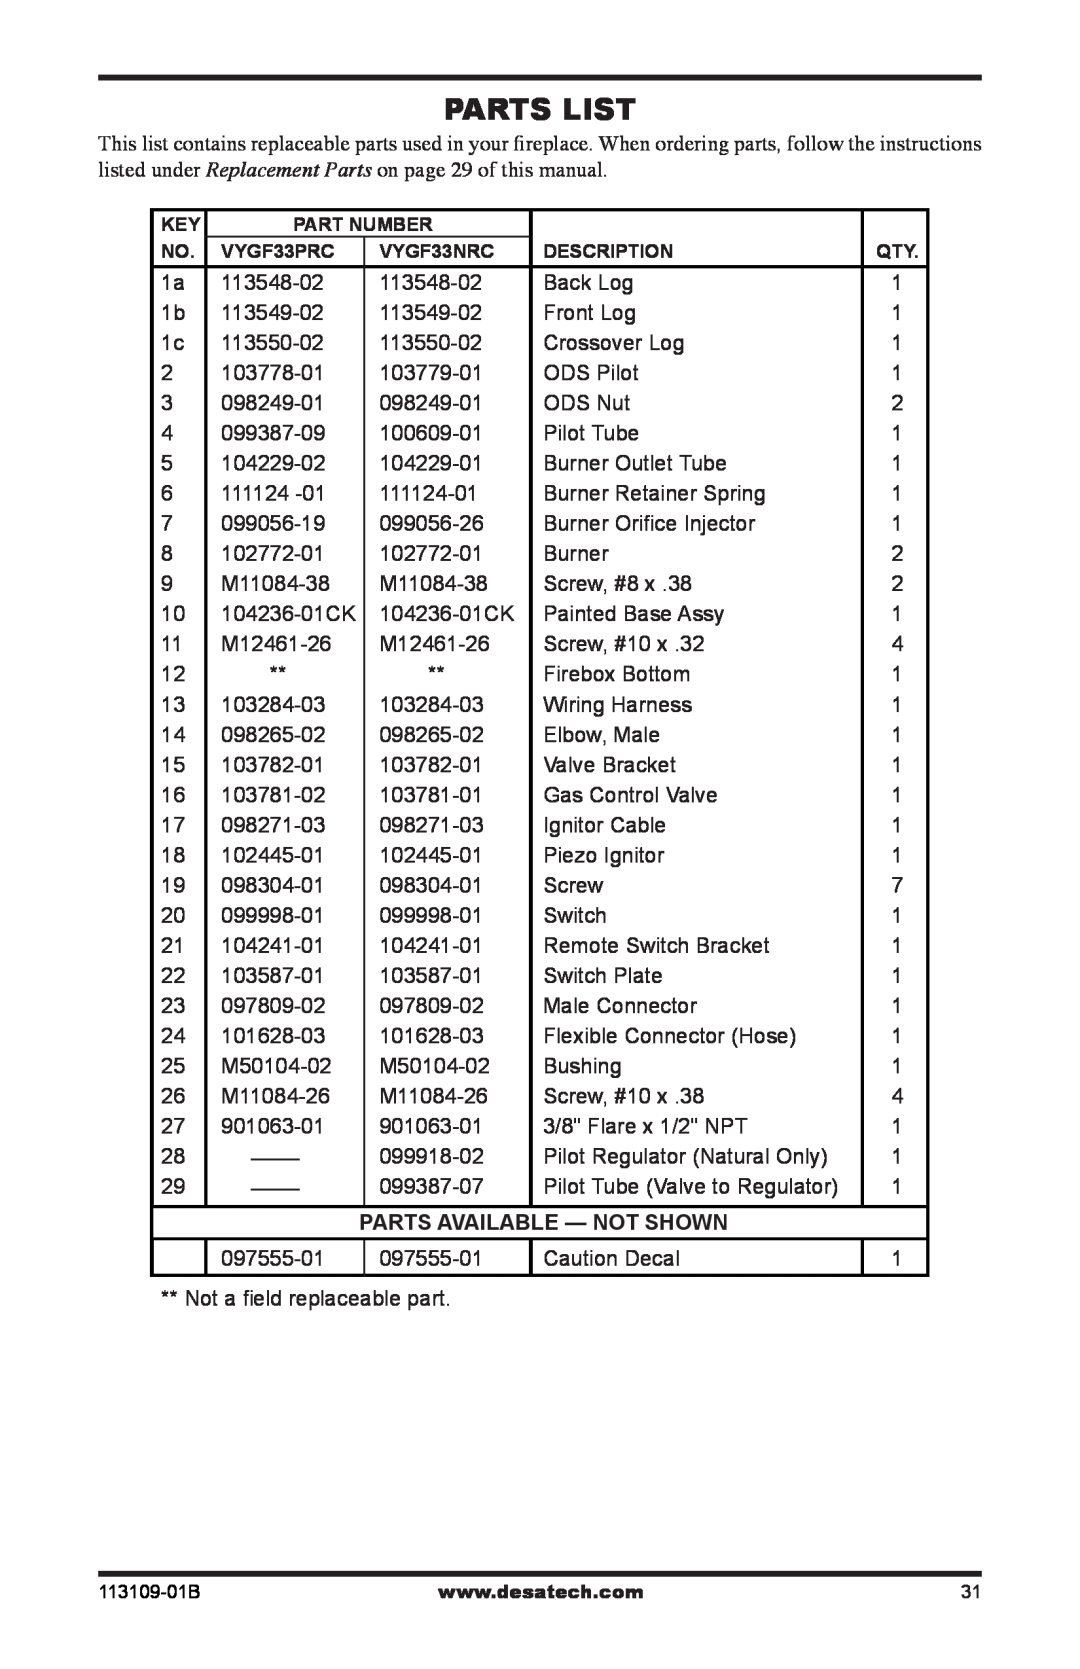 Desa VYGF33PRC installation manual Parts List, Not Shown 